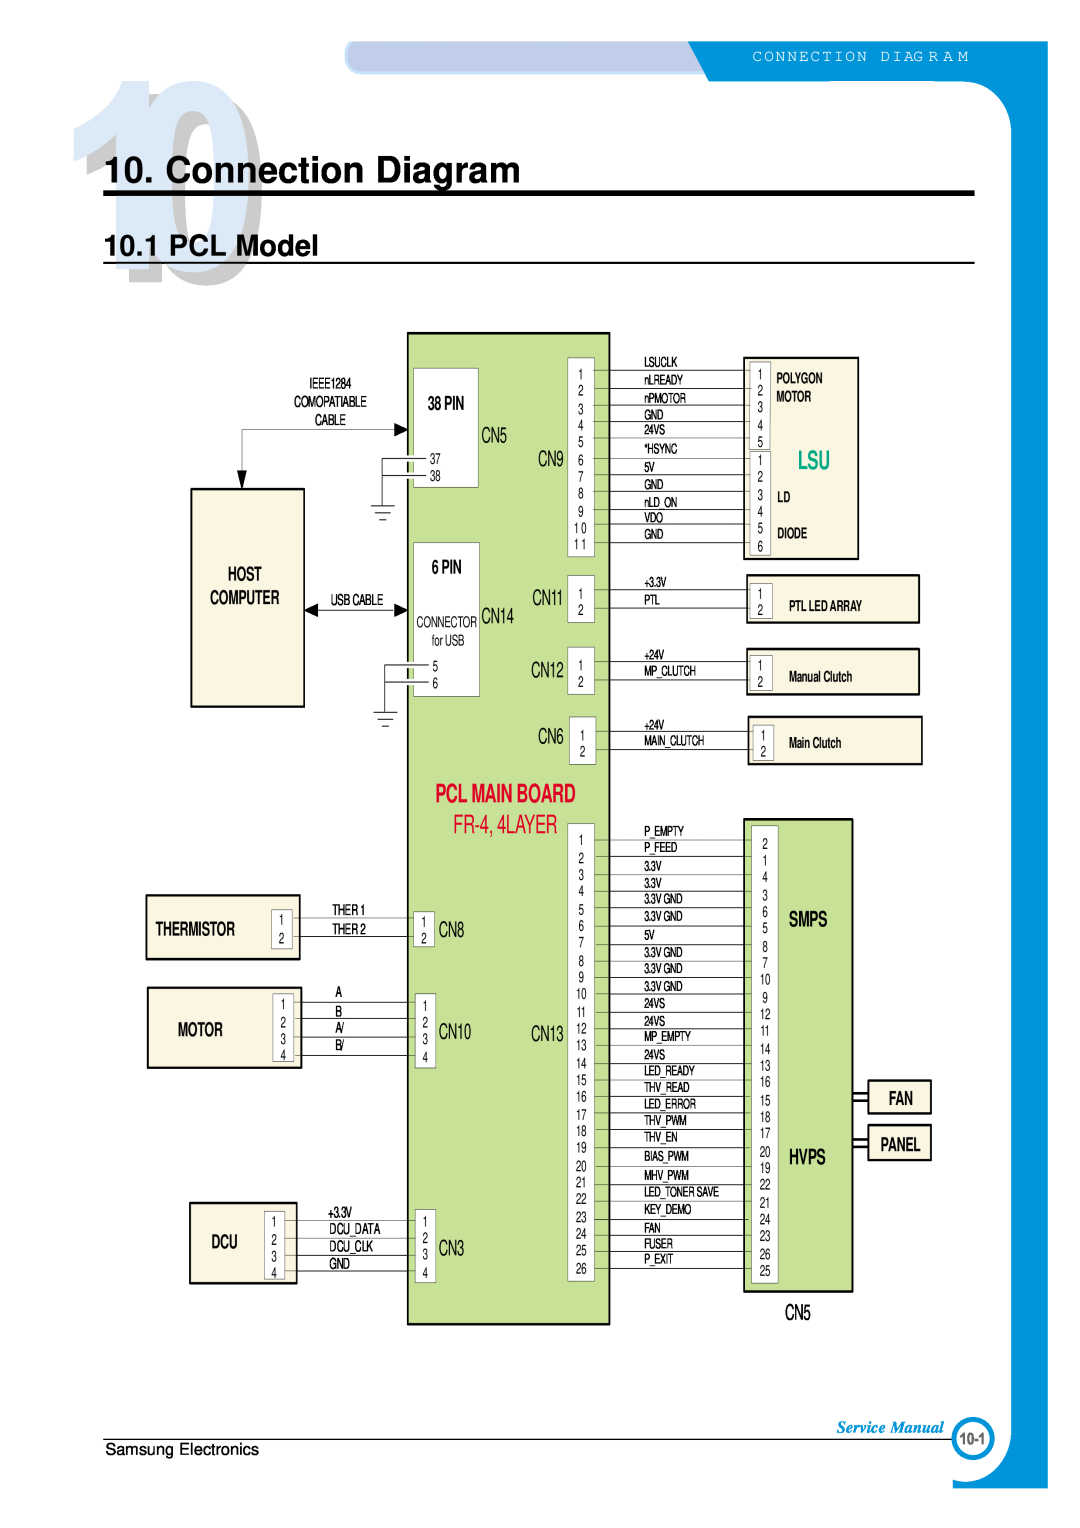 Samsung ML-1700 Connection Diagram, PCL Model, 1 LSU, CN10, CN14, Pcl Main Board, Motor, 15 FAN, FR-4, 4LAYER, Thermistor 